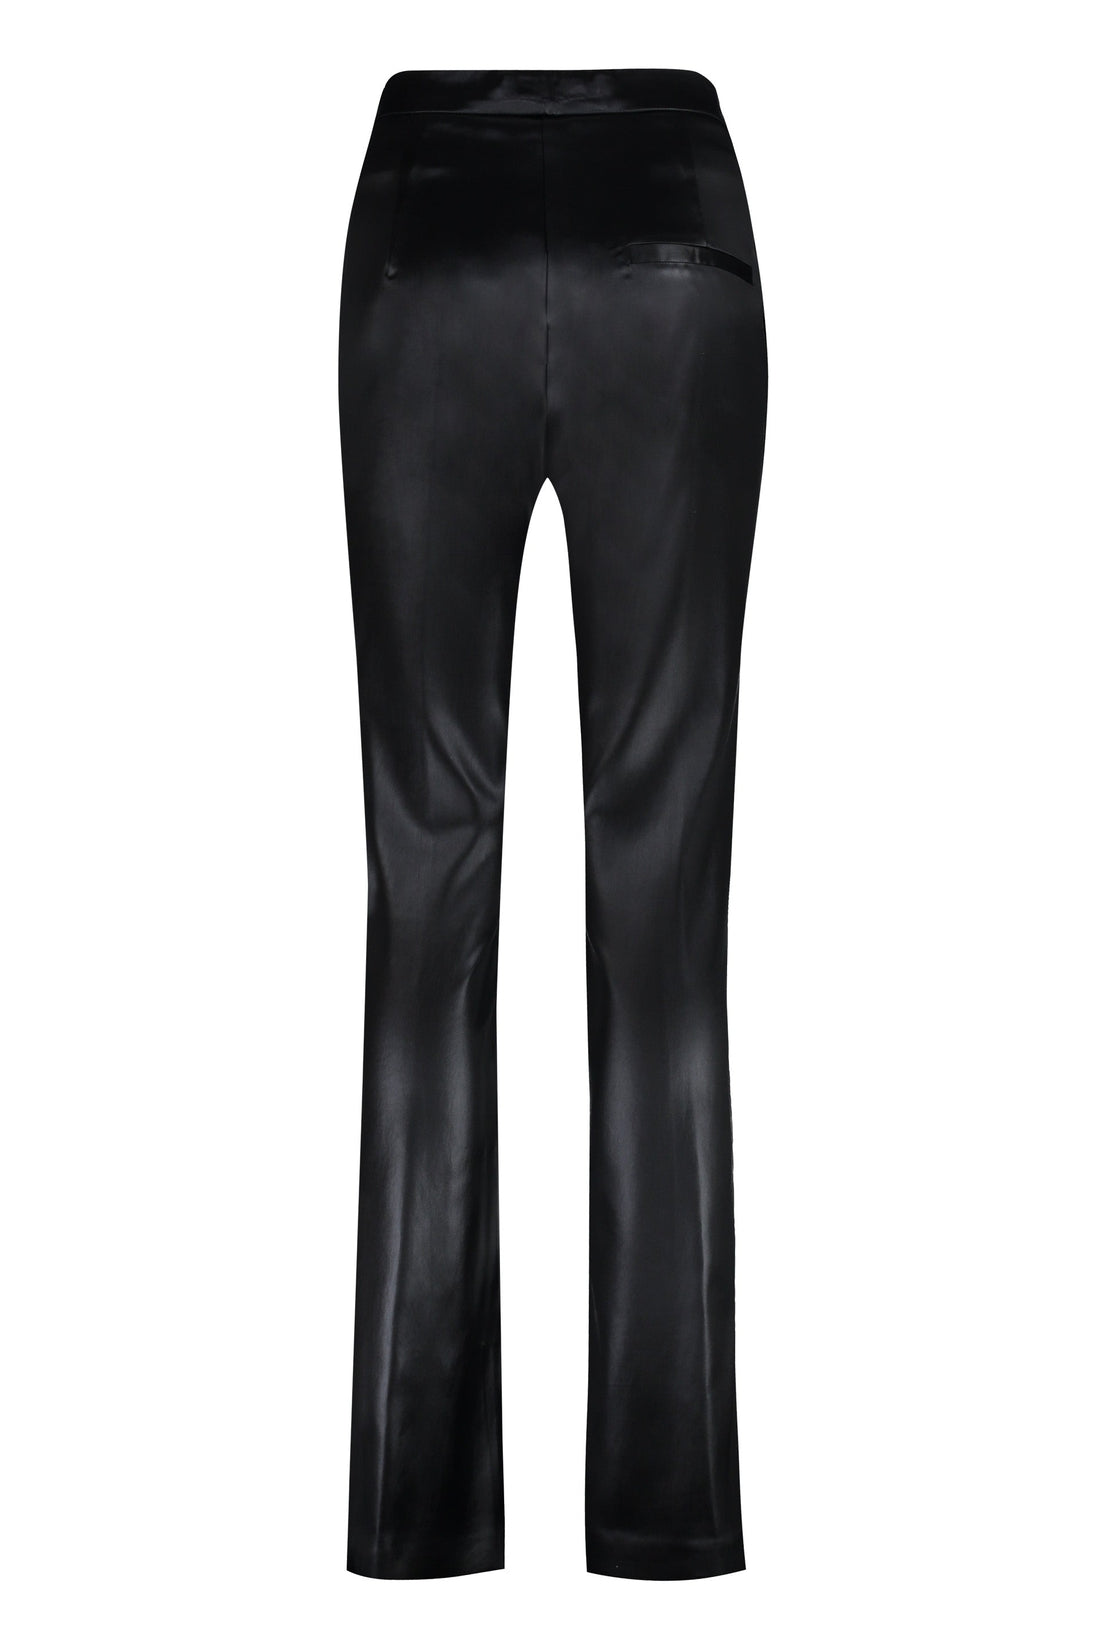 Genny-OUTLET-SALE-Satin trousers-ARCHIVIST